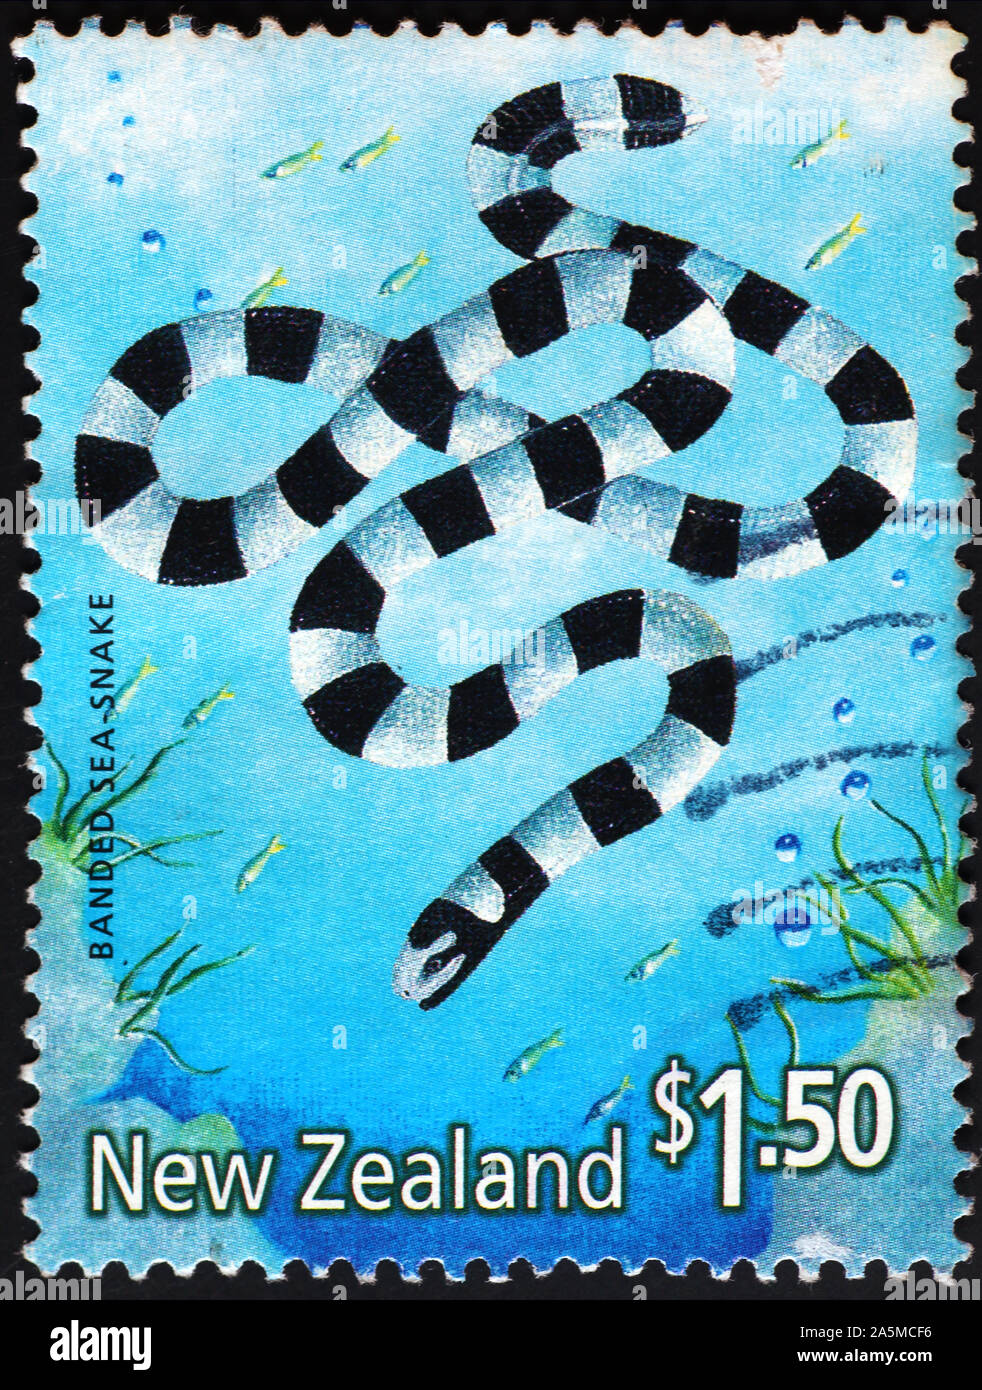 Sea snake underwater on New Zealand postage stamp Stock Photo